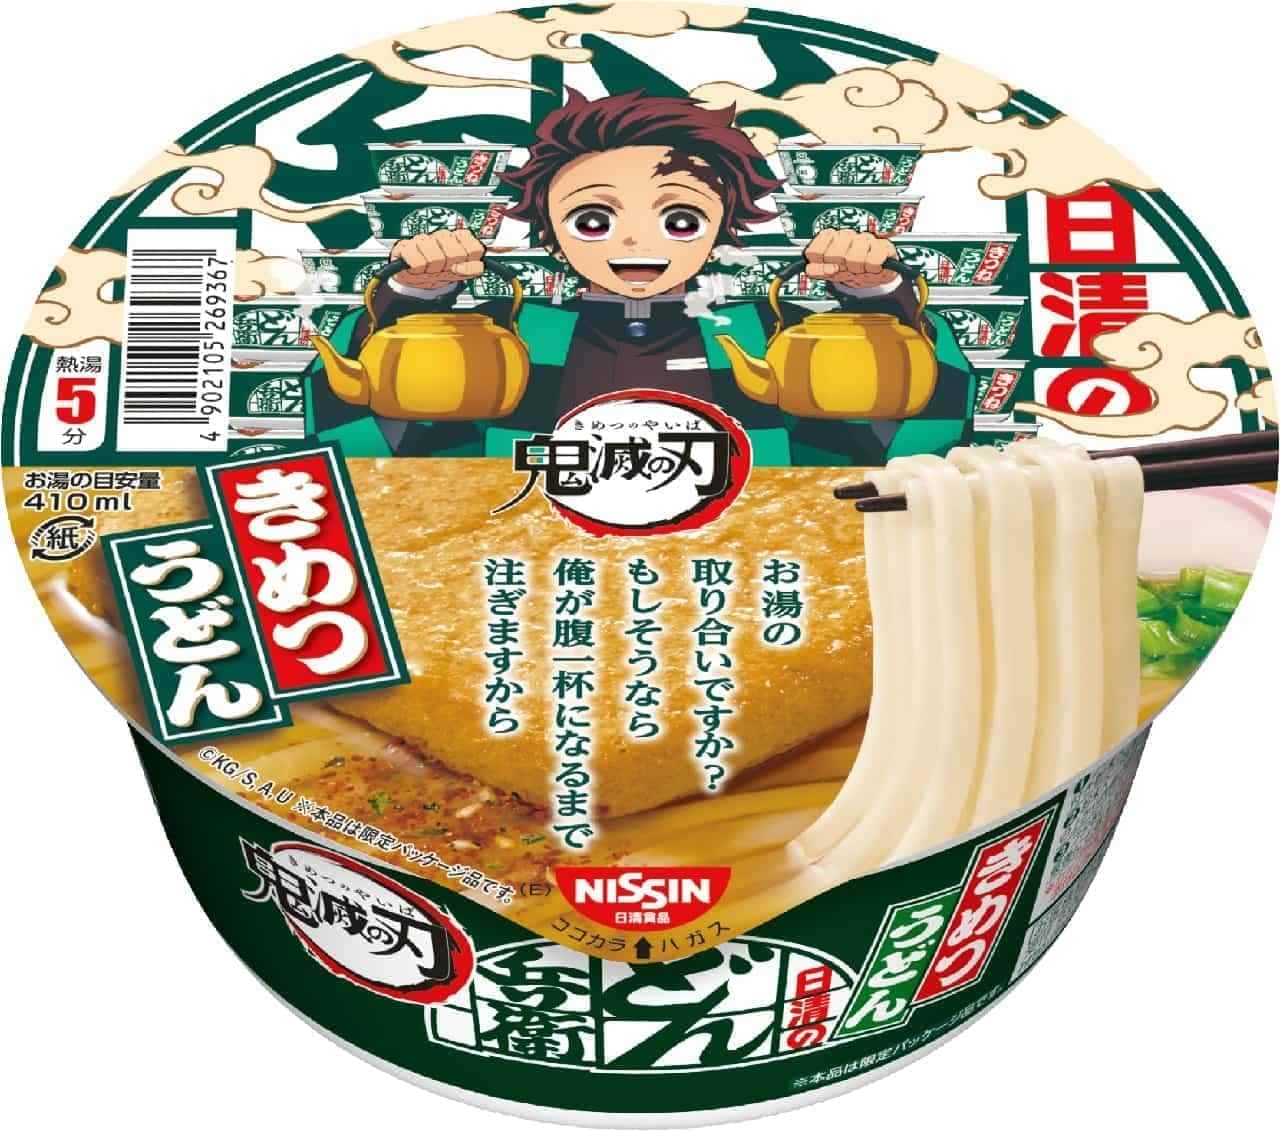 Nissin Foods "Nissin Donbei Kitsune Udon Devil's Blade Package"